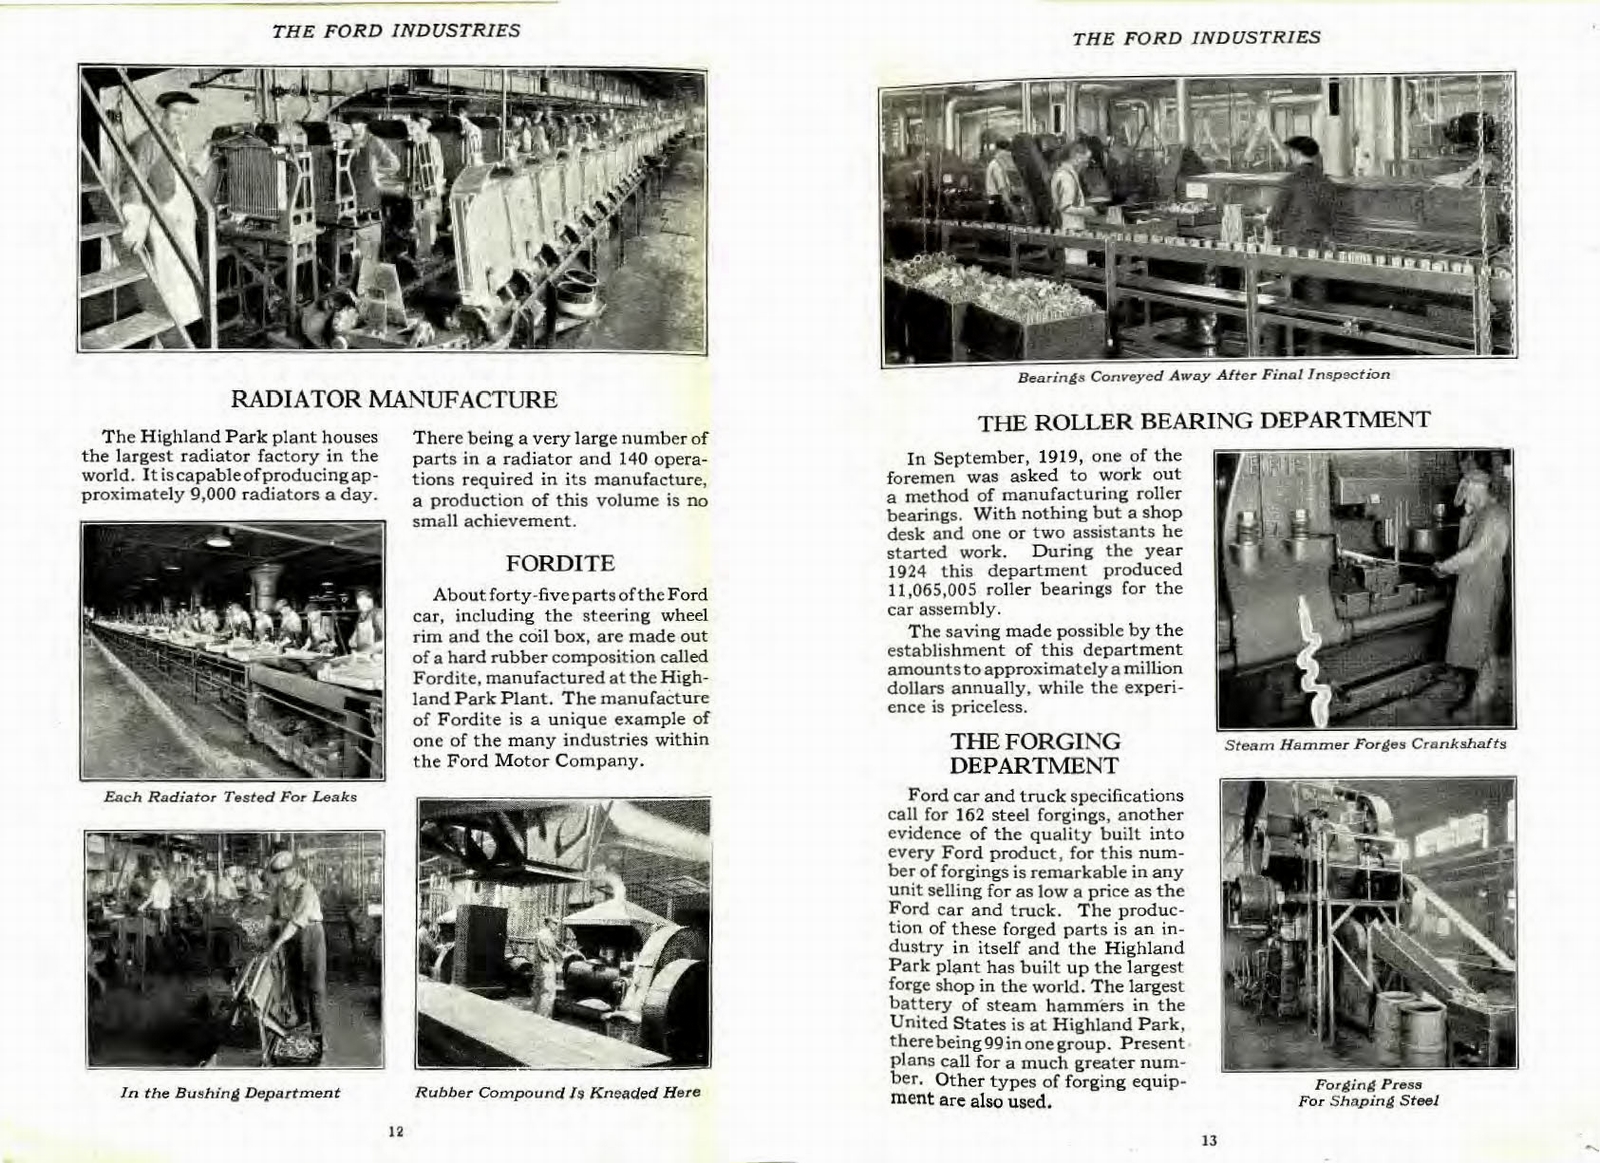 n_1925 -The Ford Industries-12-13.jpg